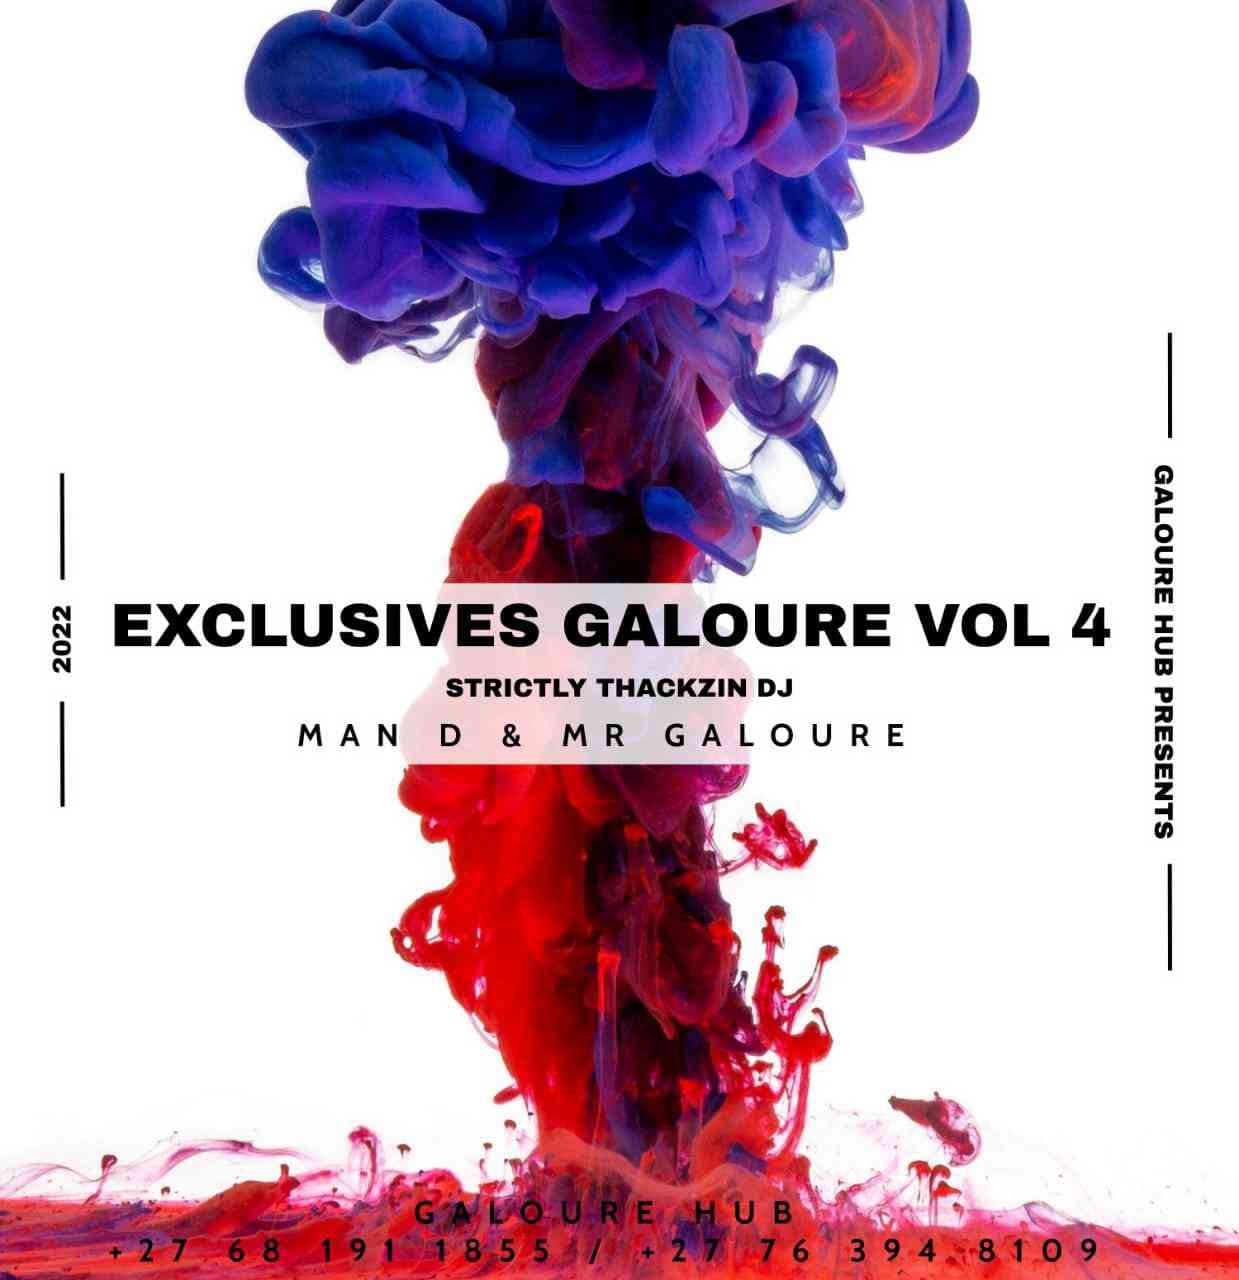 Man d & Mr Galoure Exclusives Galoure vol. 4 (strictly ThackzinDJ) 